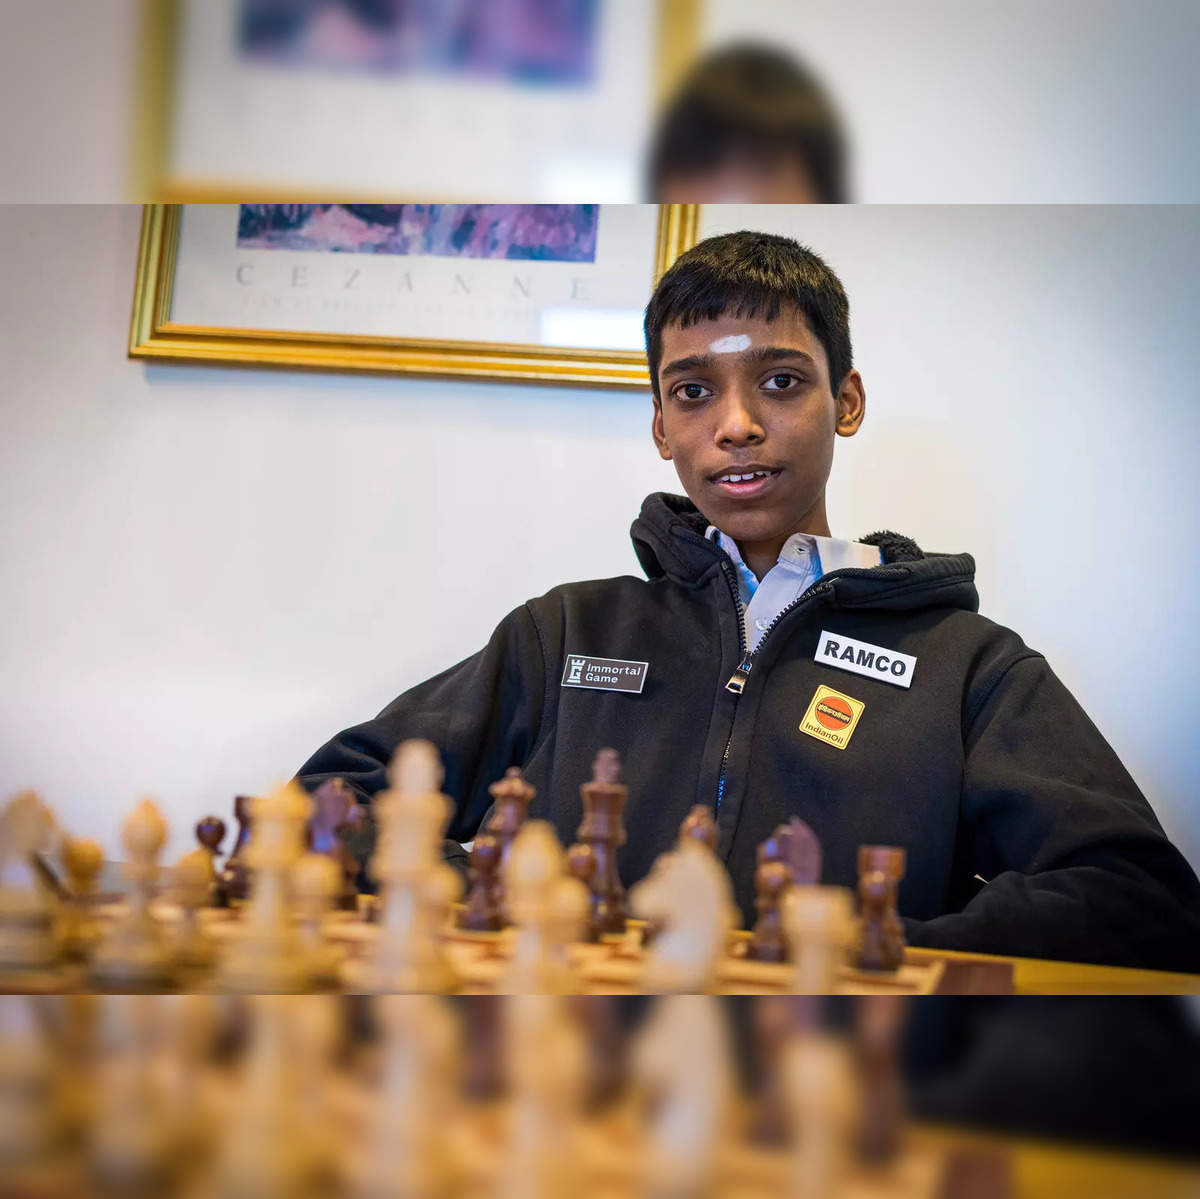 Praggu's 'Magnus' Opus: How sister's hobby shaped young chess wizard  Praggnanandhaa's life - The Economic Times